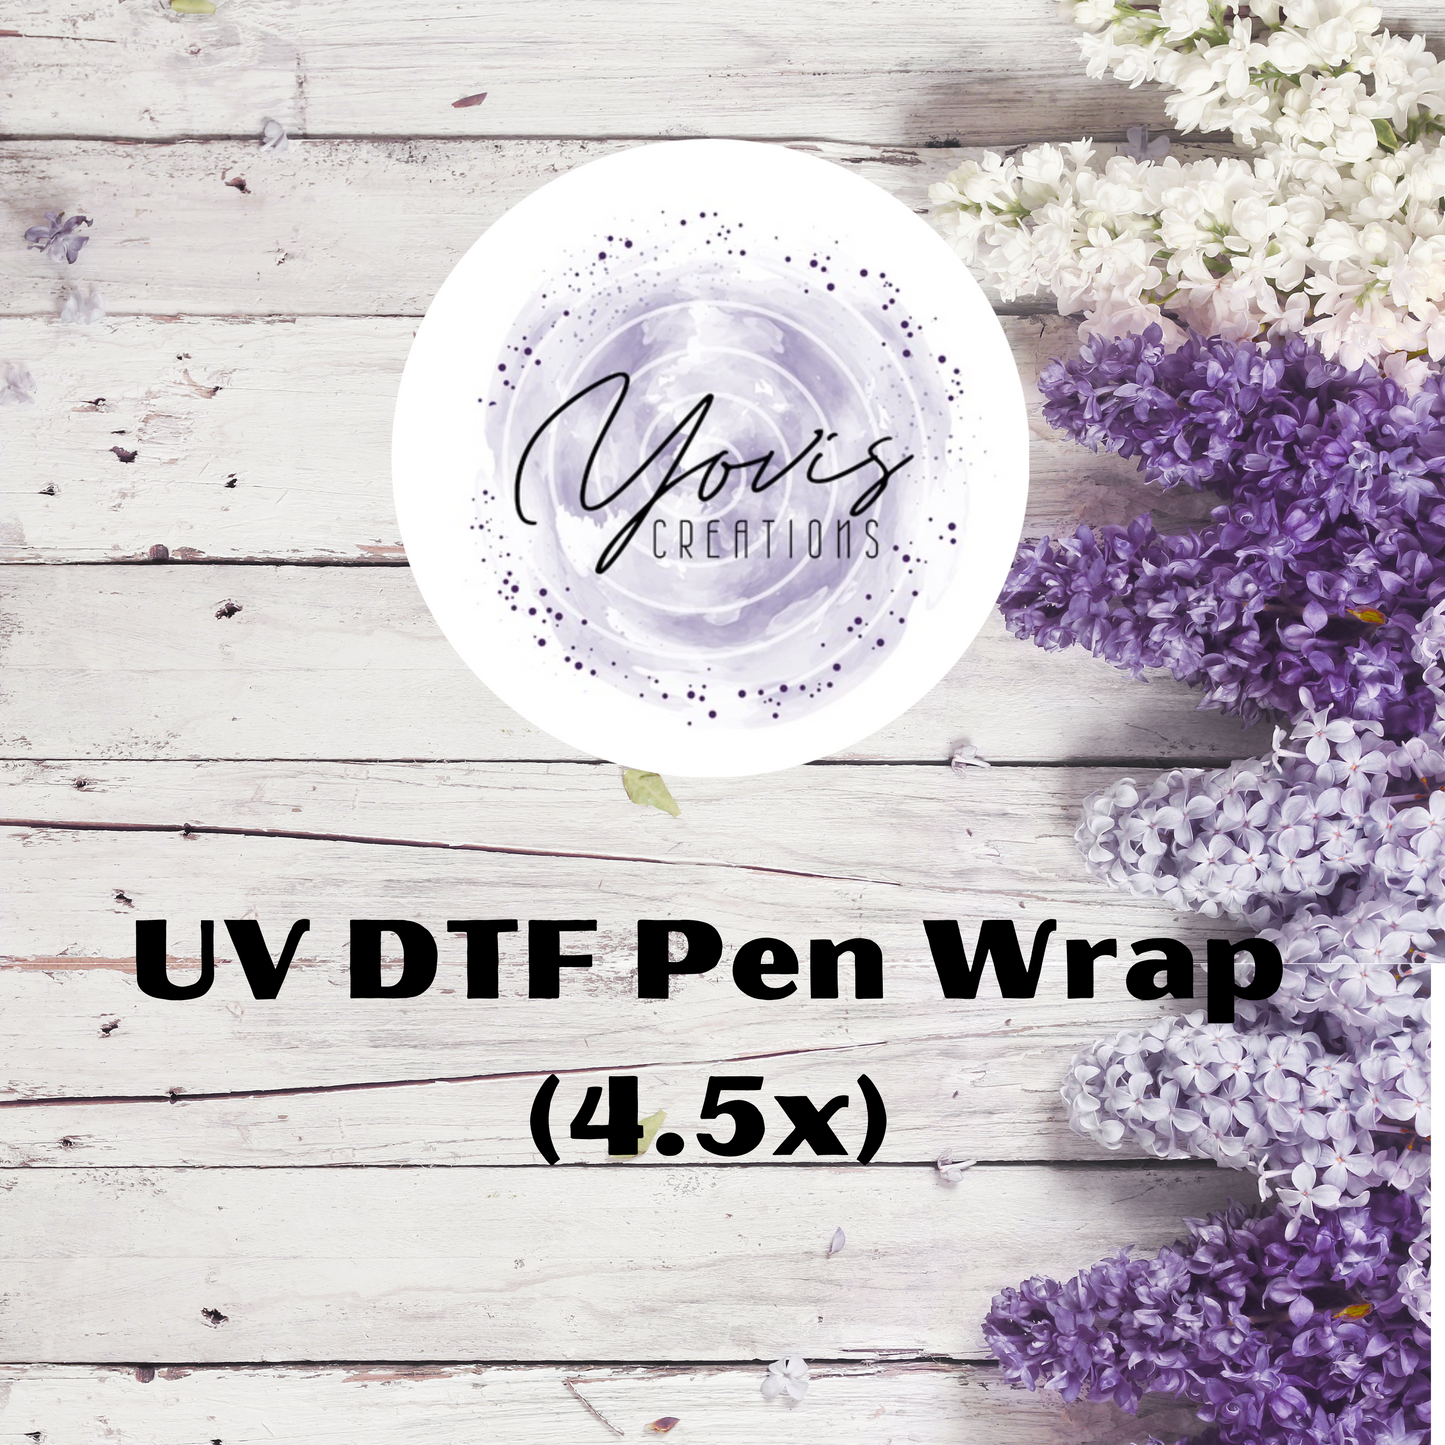 UV DTF Pen Wrap